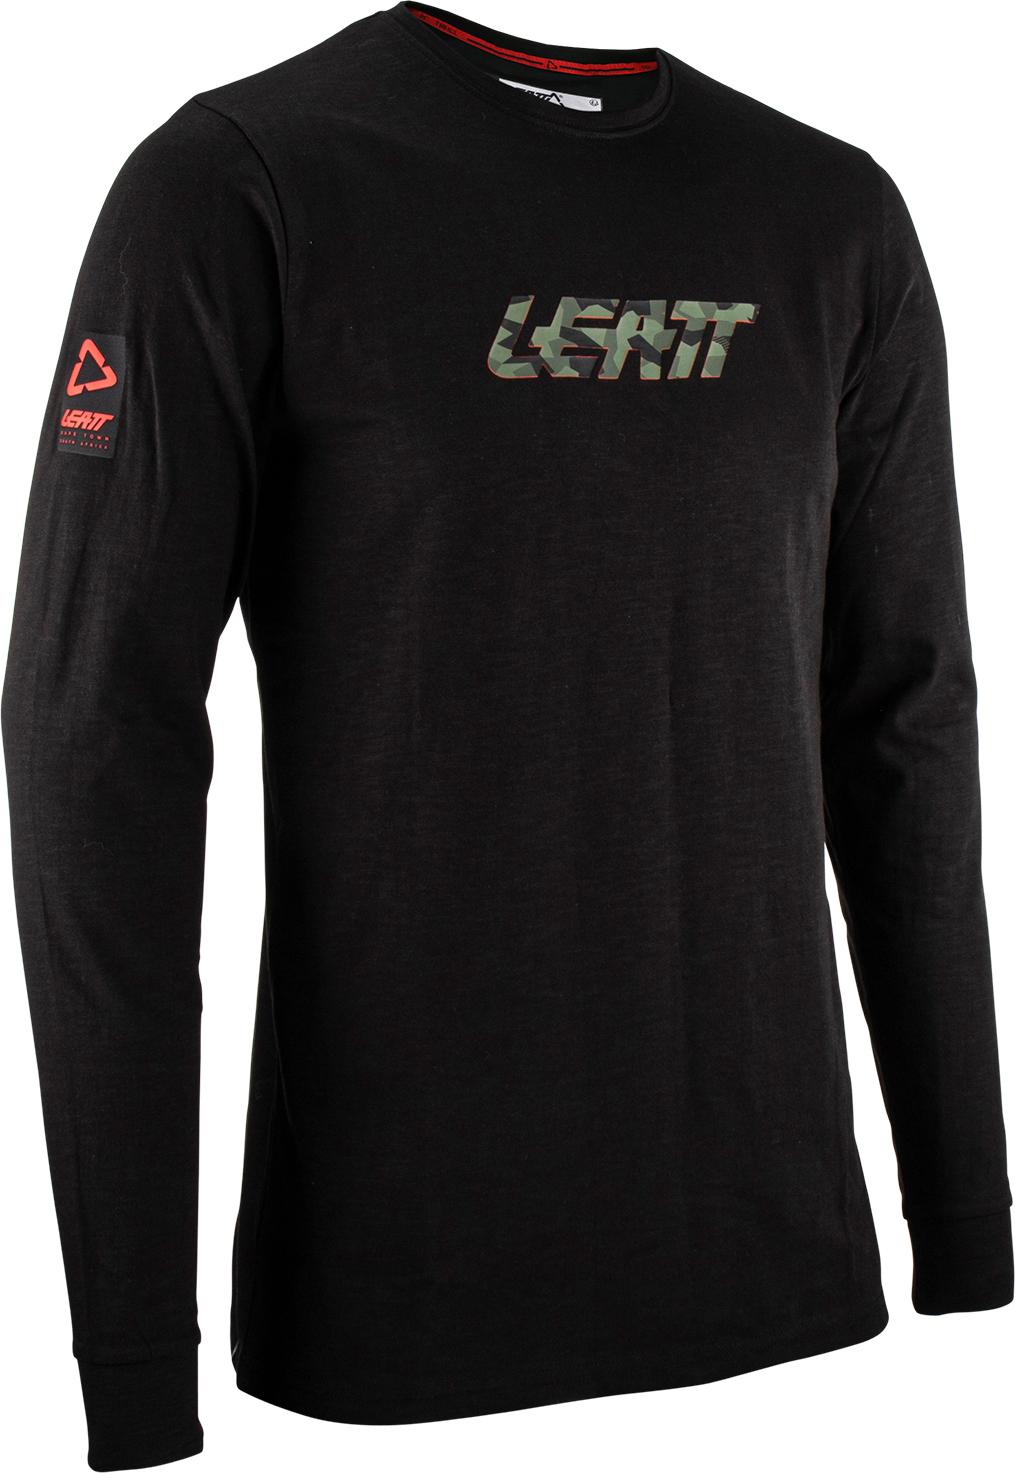 Leatt Camo Long Sleeve T-shirt - Black/camo